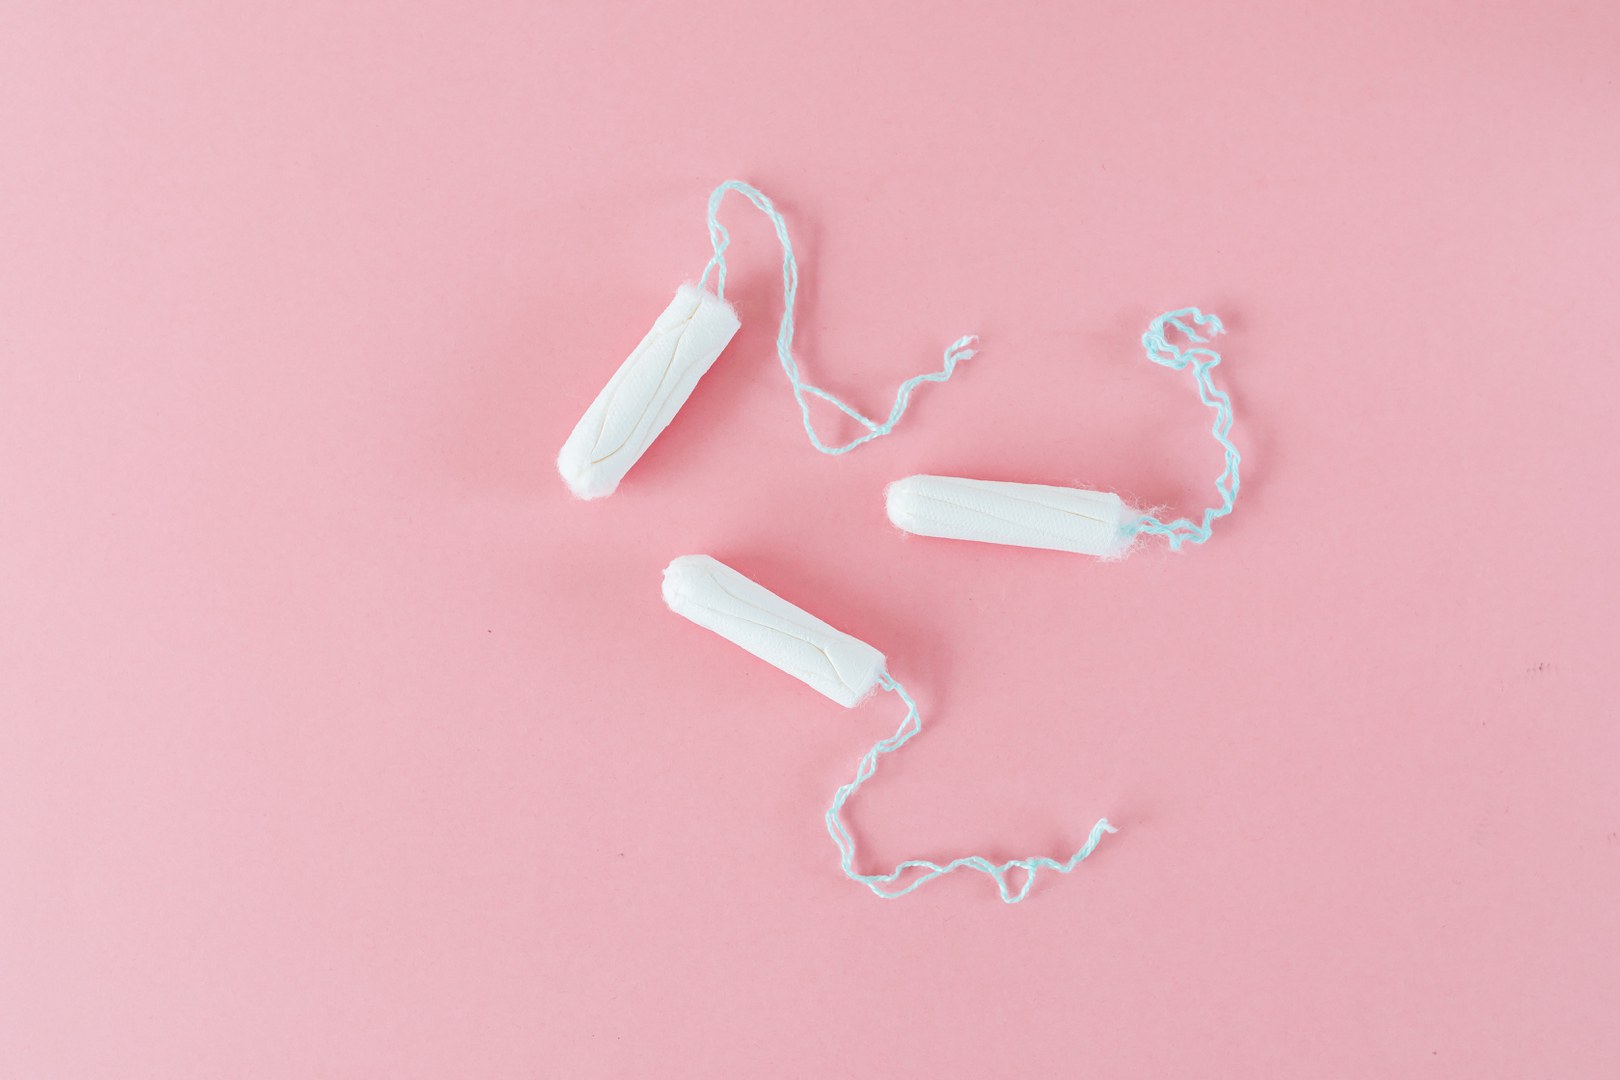 Menstruationshygieneartikel